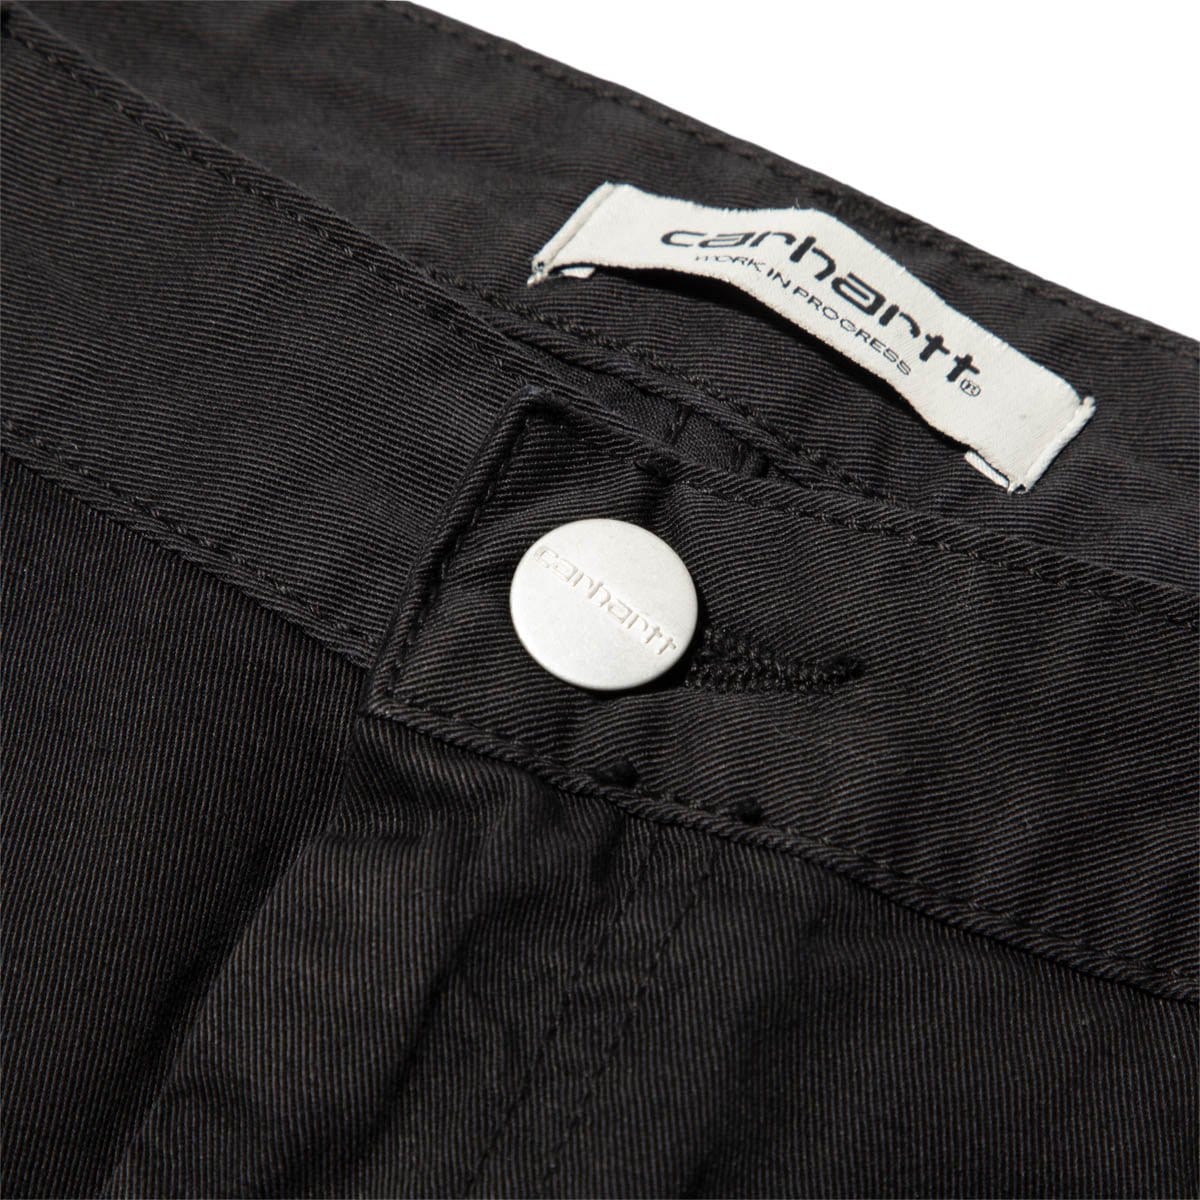 Carhartt WIP Women's Pierce Pant Black Size 25, Black Cotton Canvas